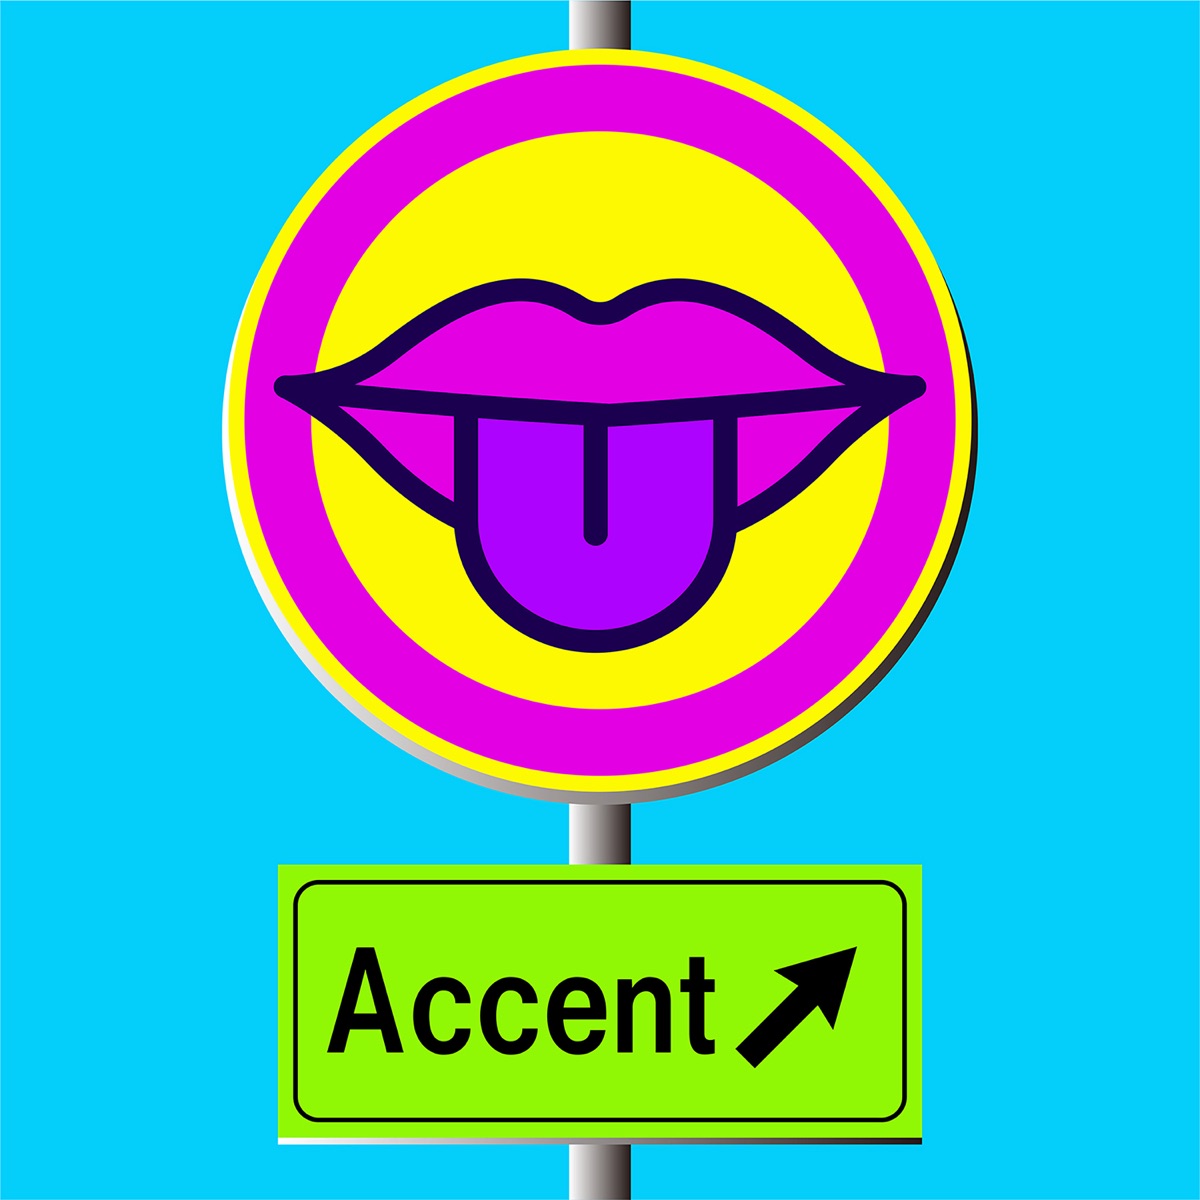 『B.O.L.T - Accent』収録の『Accent』ジャケット